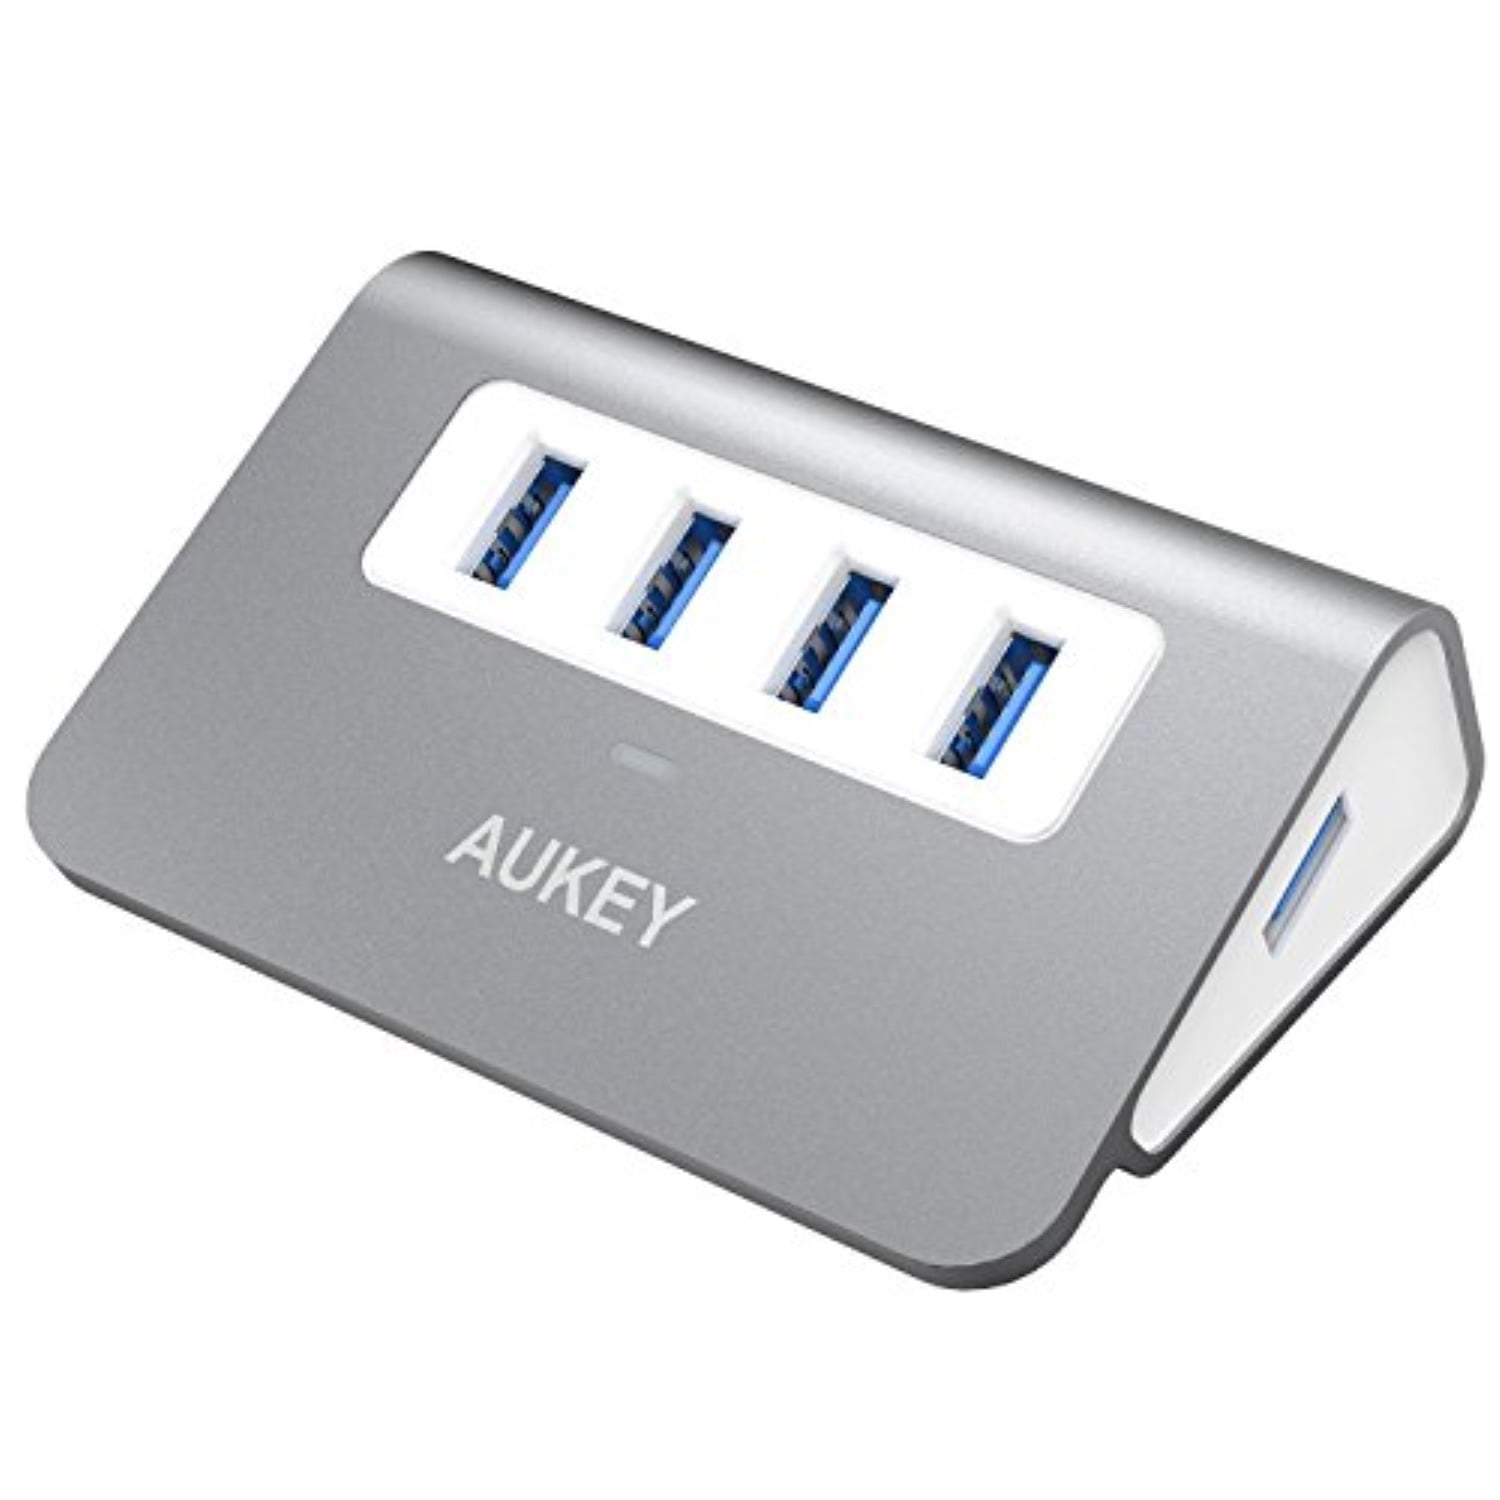 AUKEY USB Hub 3.0 Portable Aluminum 4 Port USB 3.0 Data Hub with 1.6ft ...